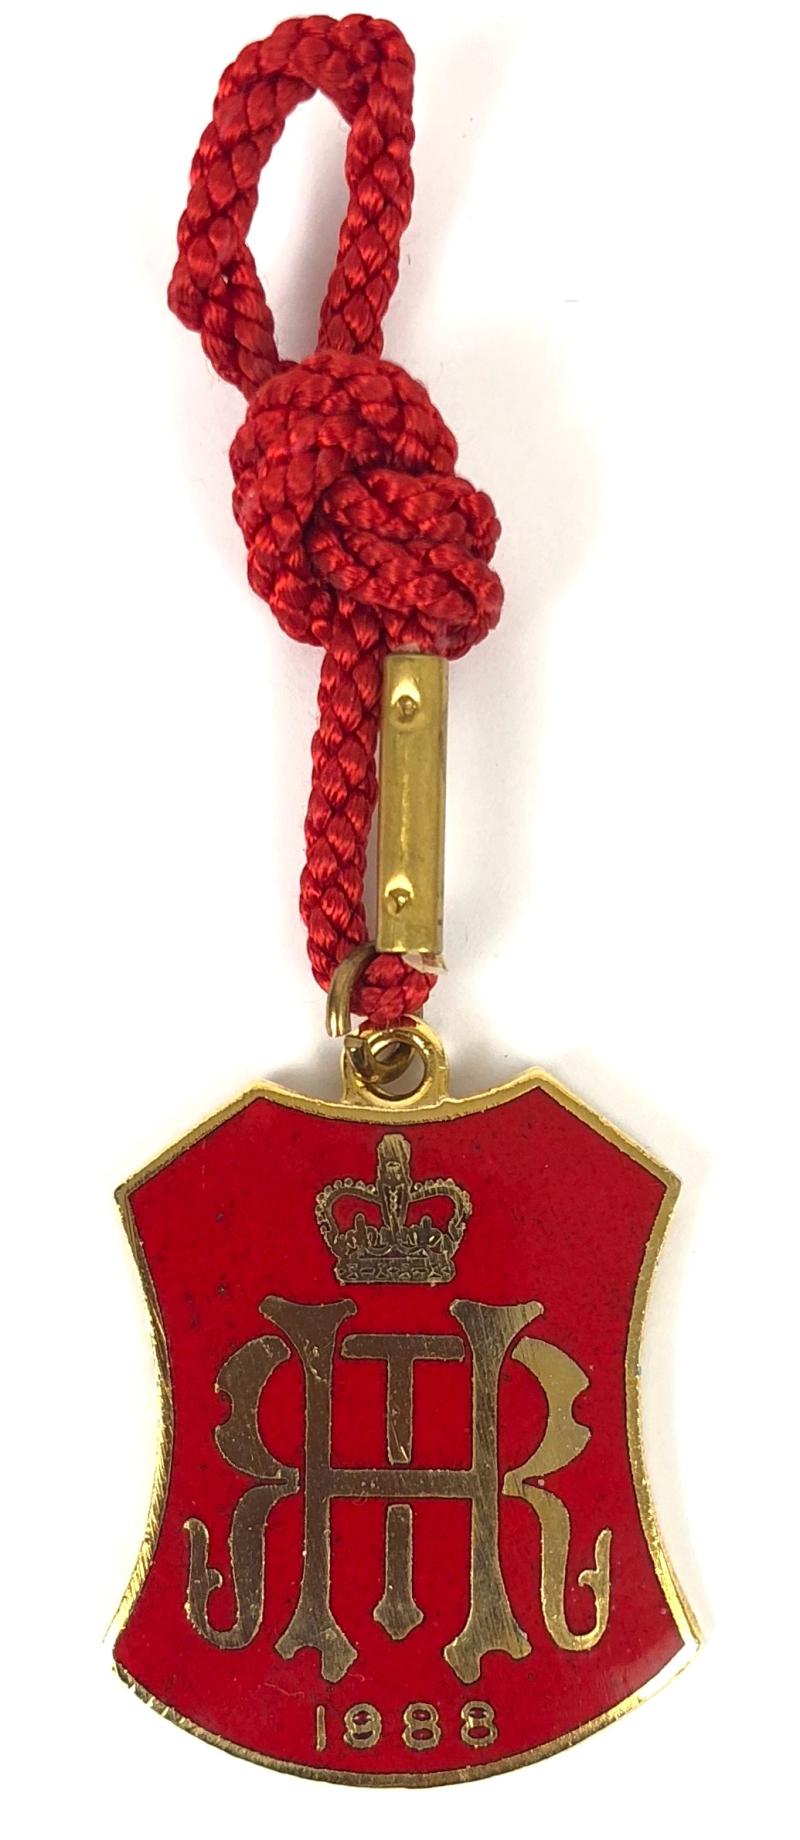 1988 Henley Royal Regatta stewards enclosure badge